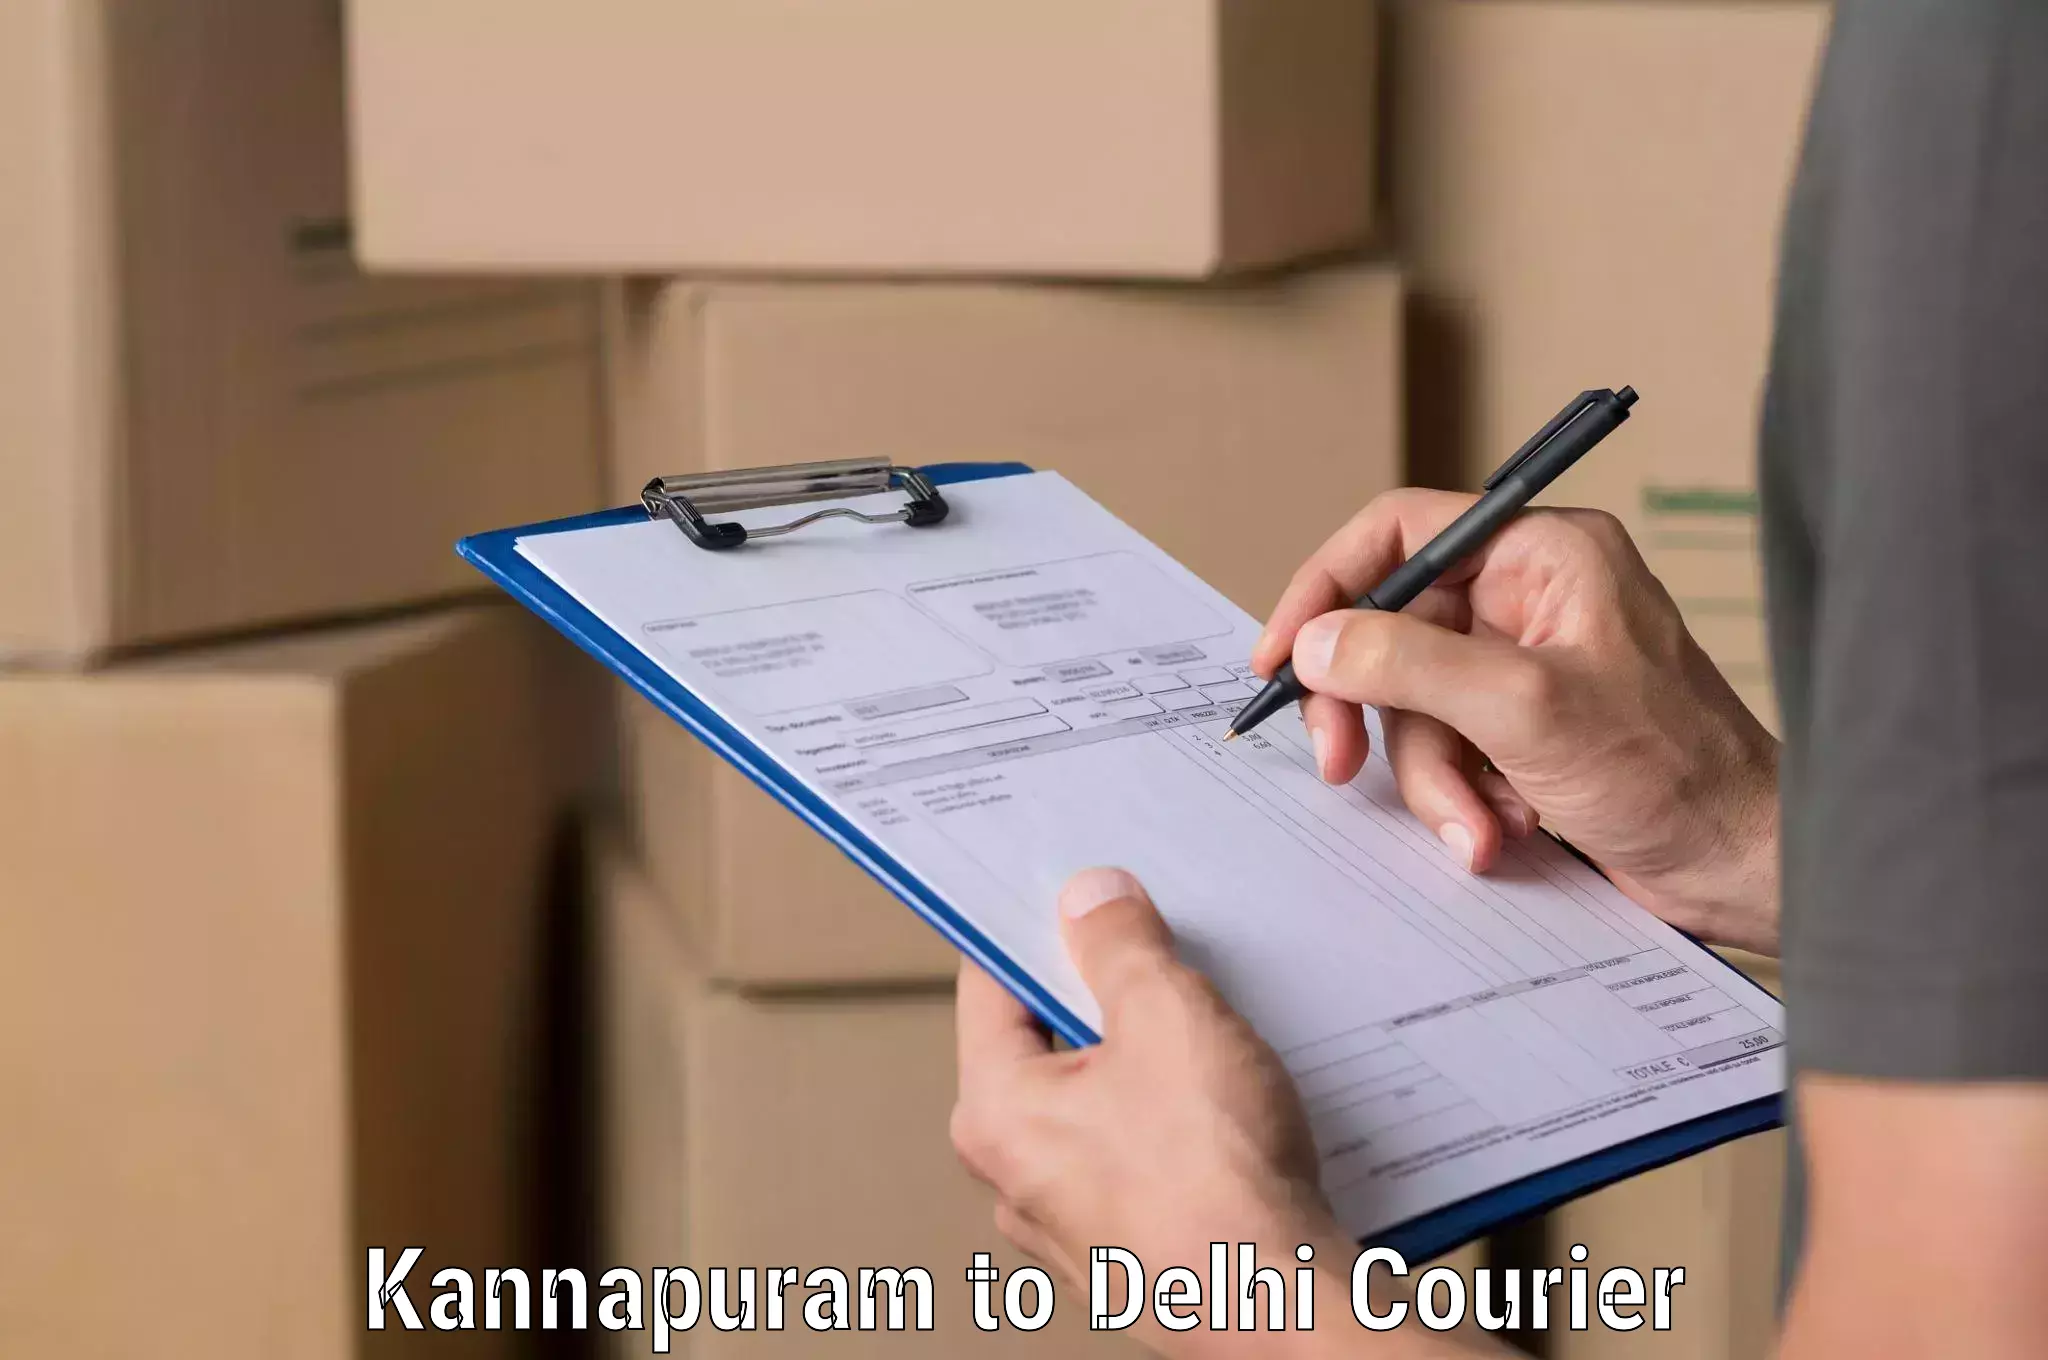 Efficient cargo services in Kannapuram to University of Delhi